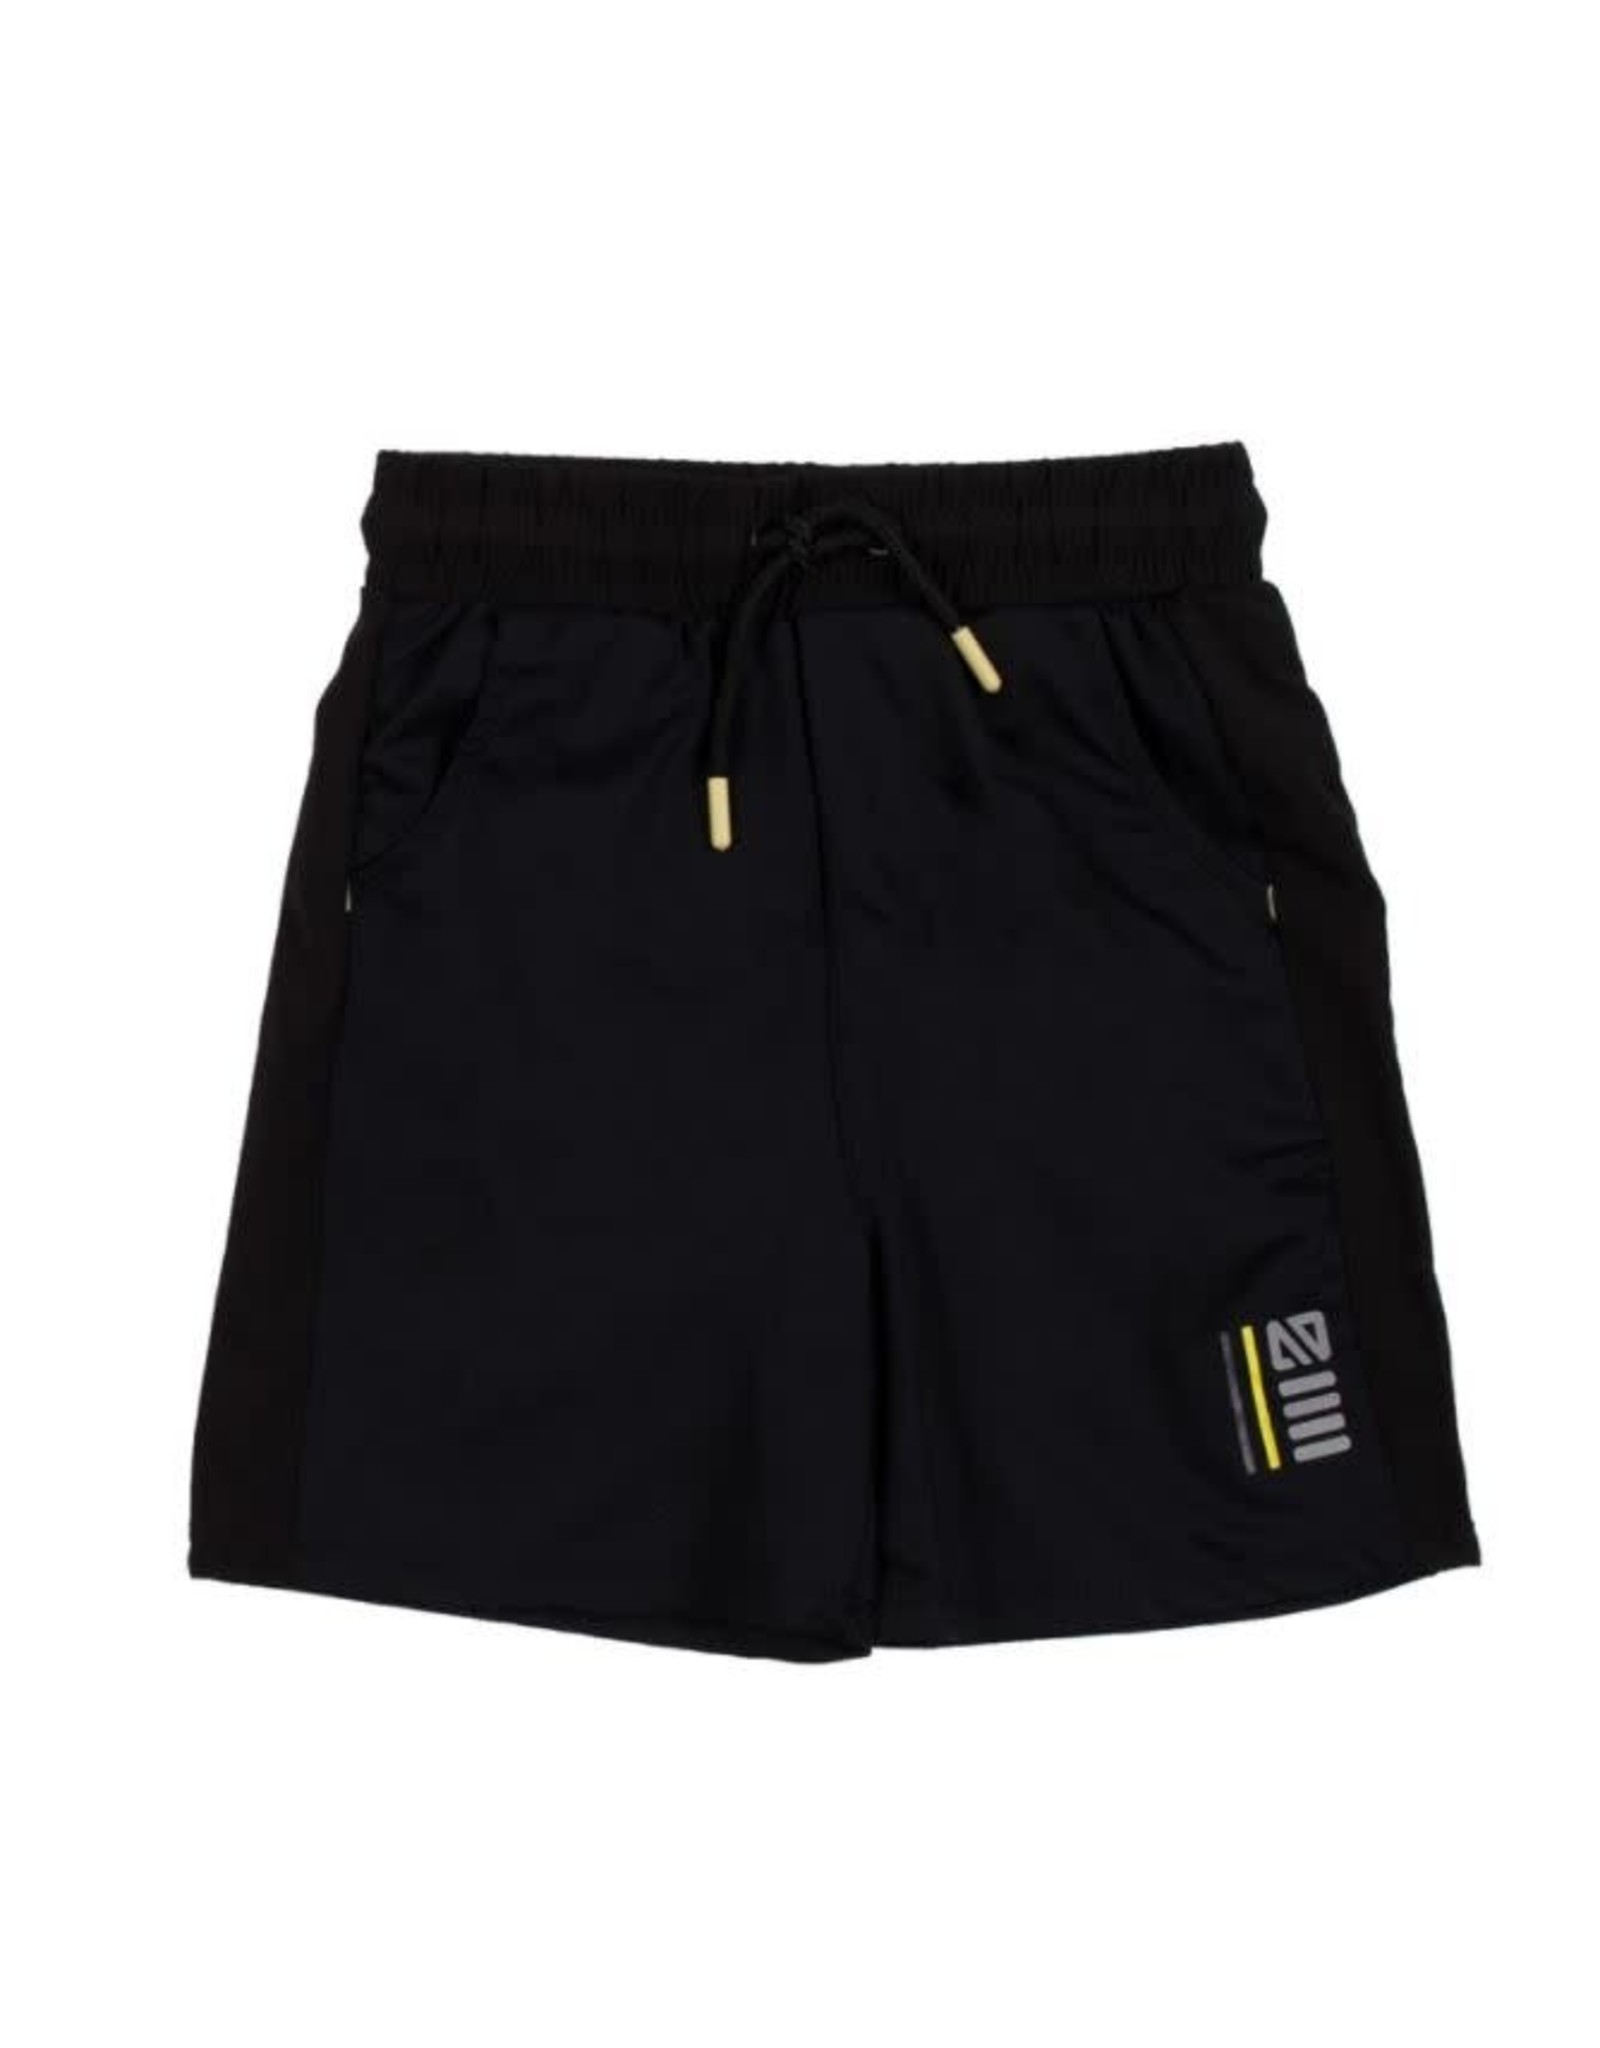 Noruk Black Athletic Shorts with Tie Waist